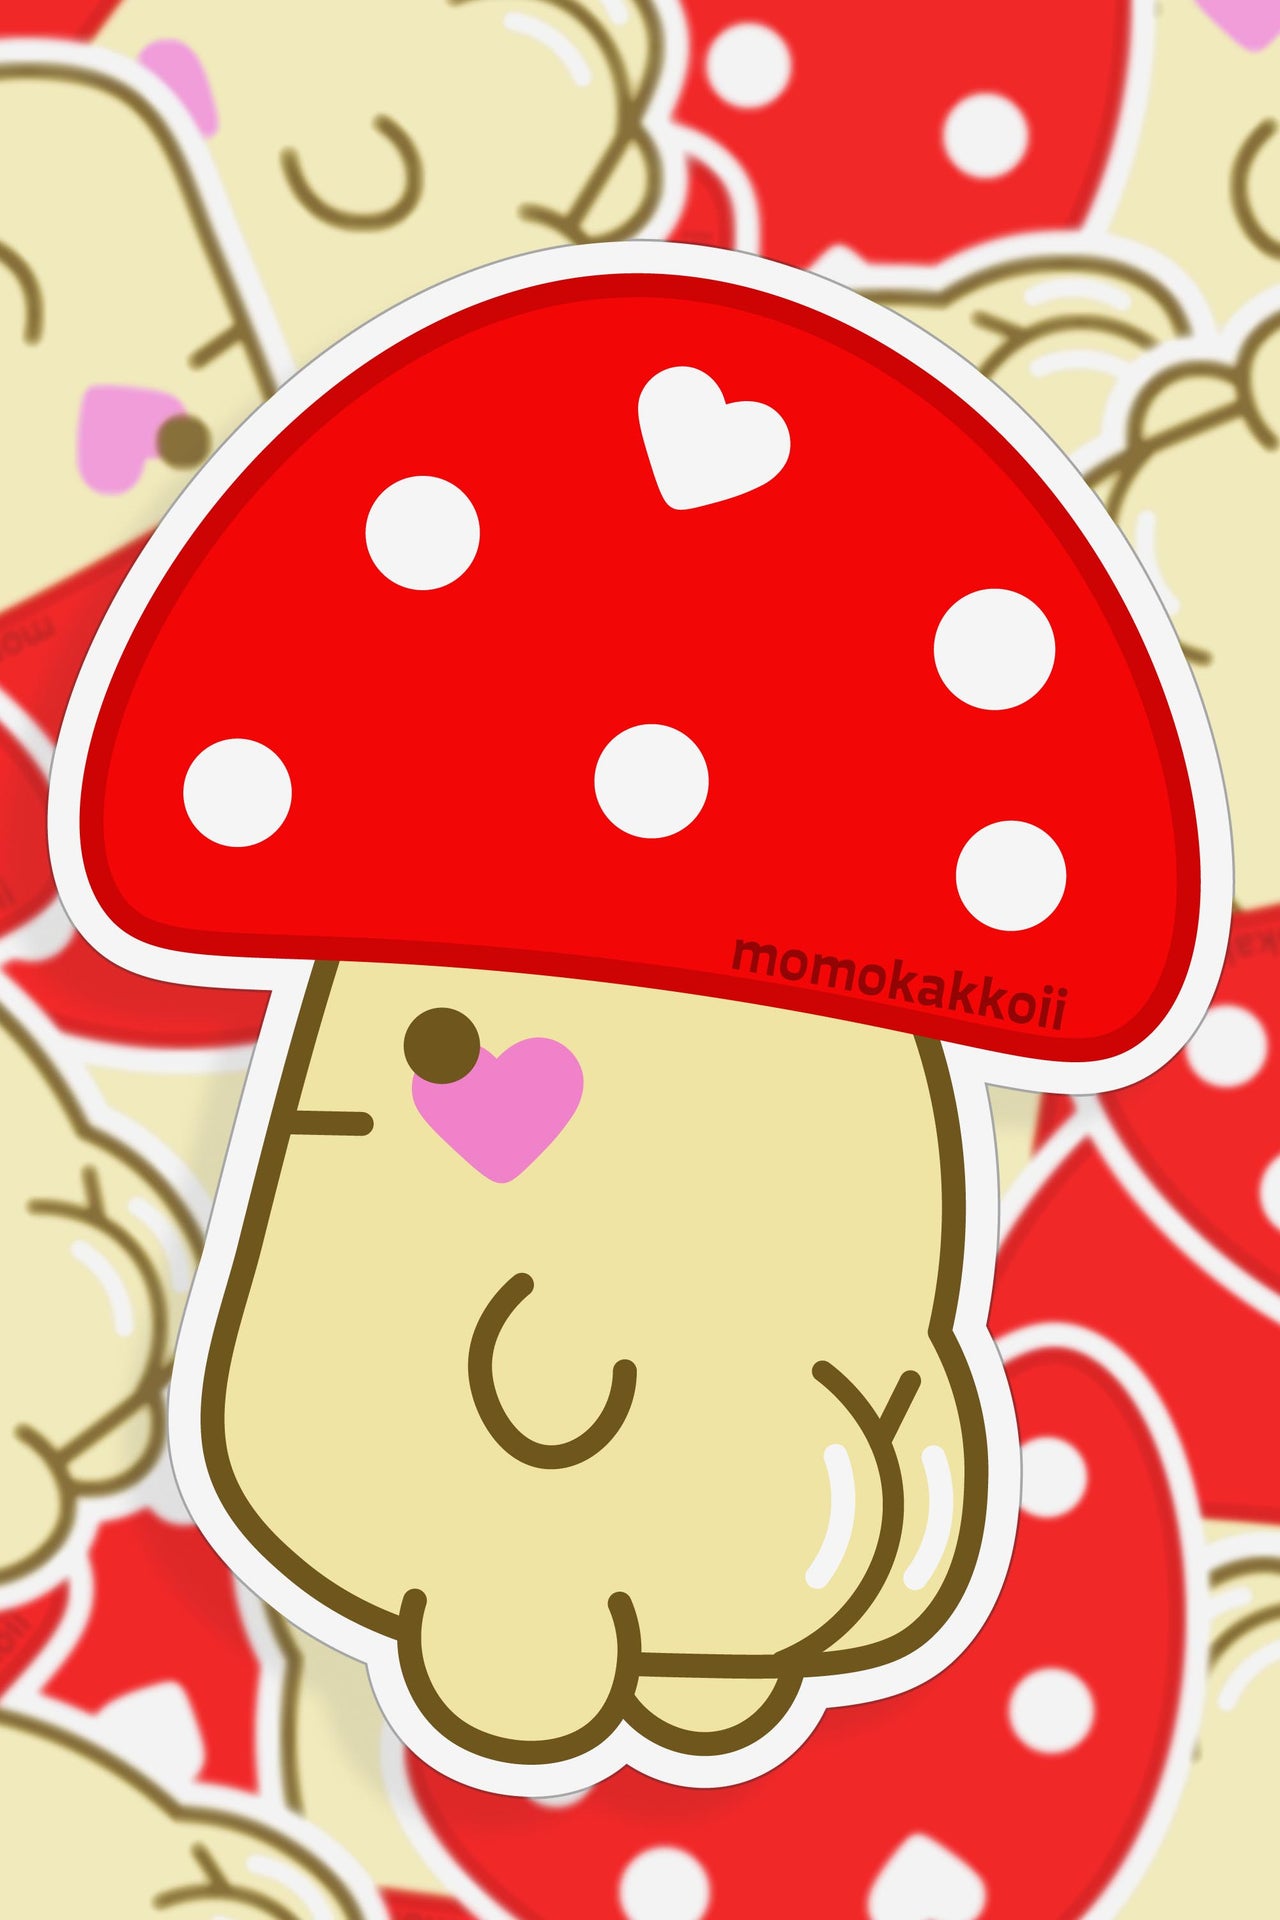 Thicc Mushroom Friend Vinyl Sticker - Momokakkoii